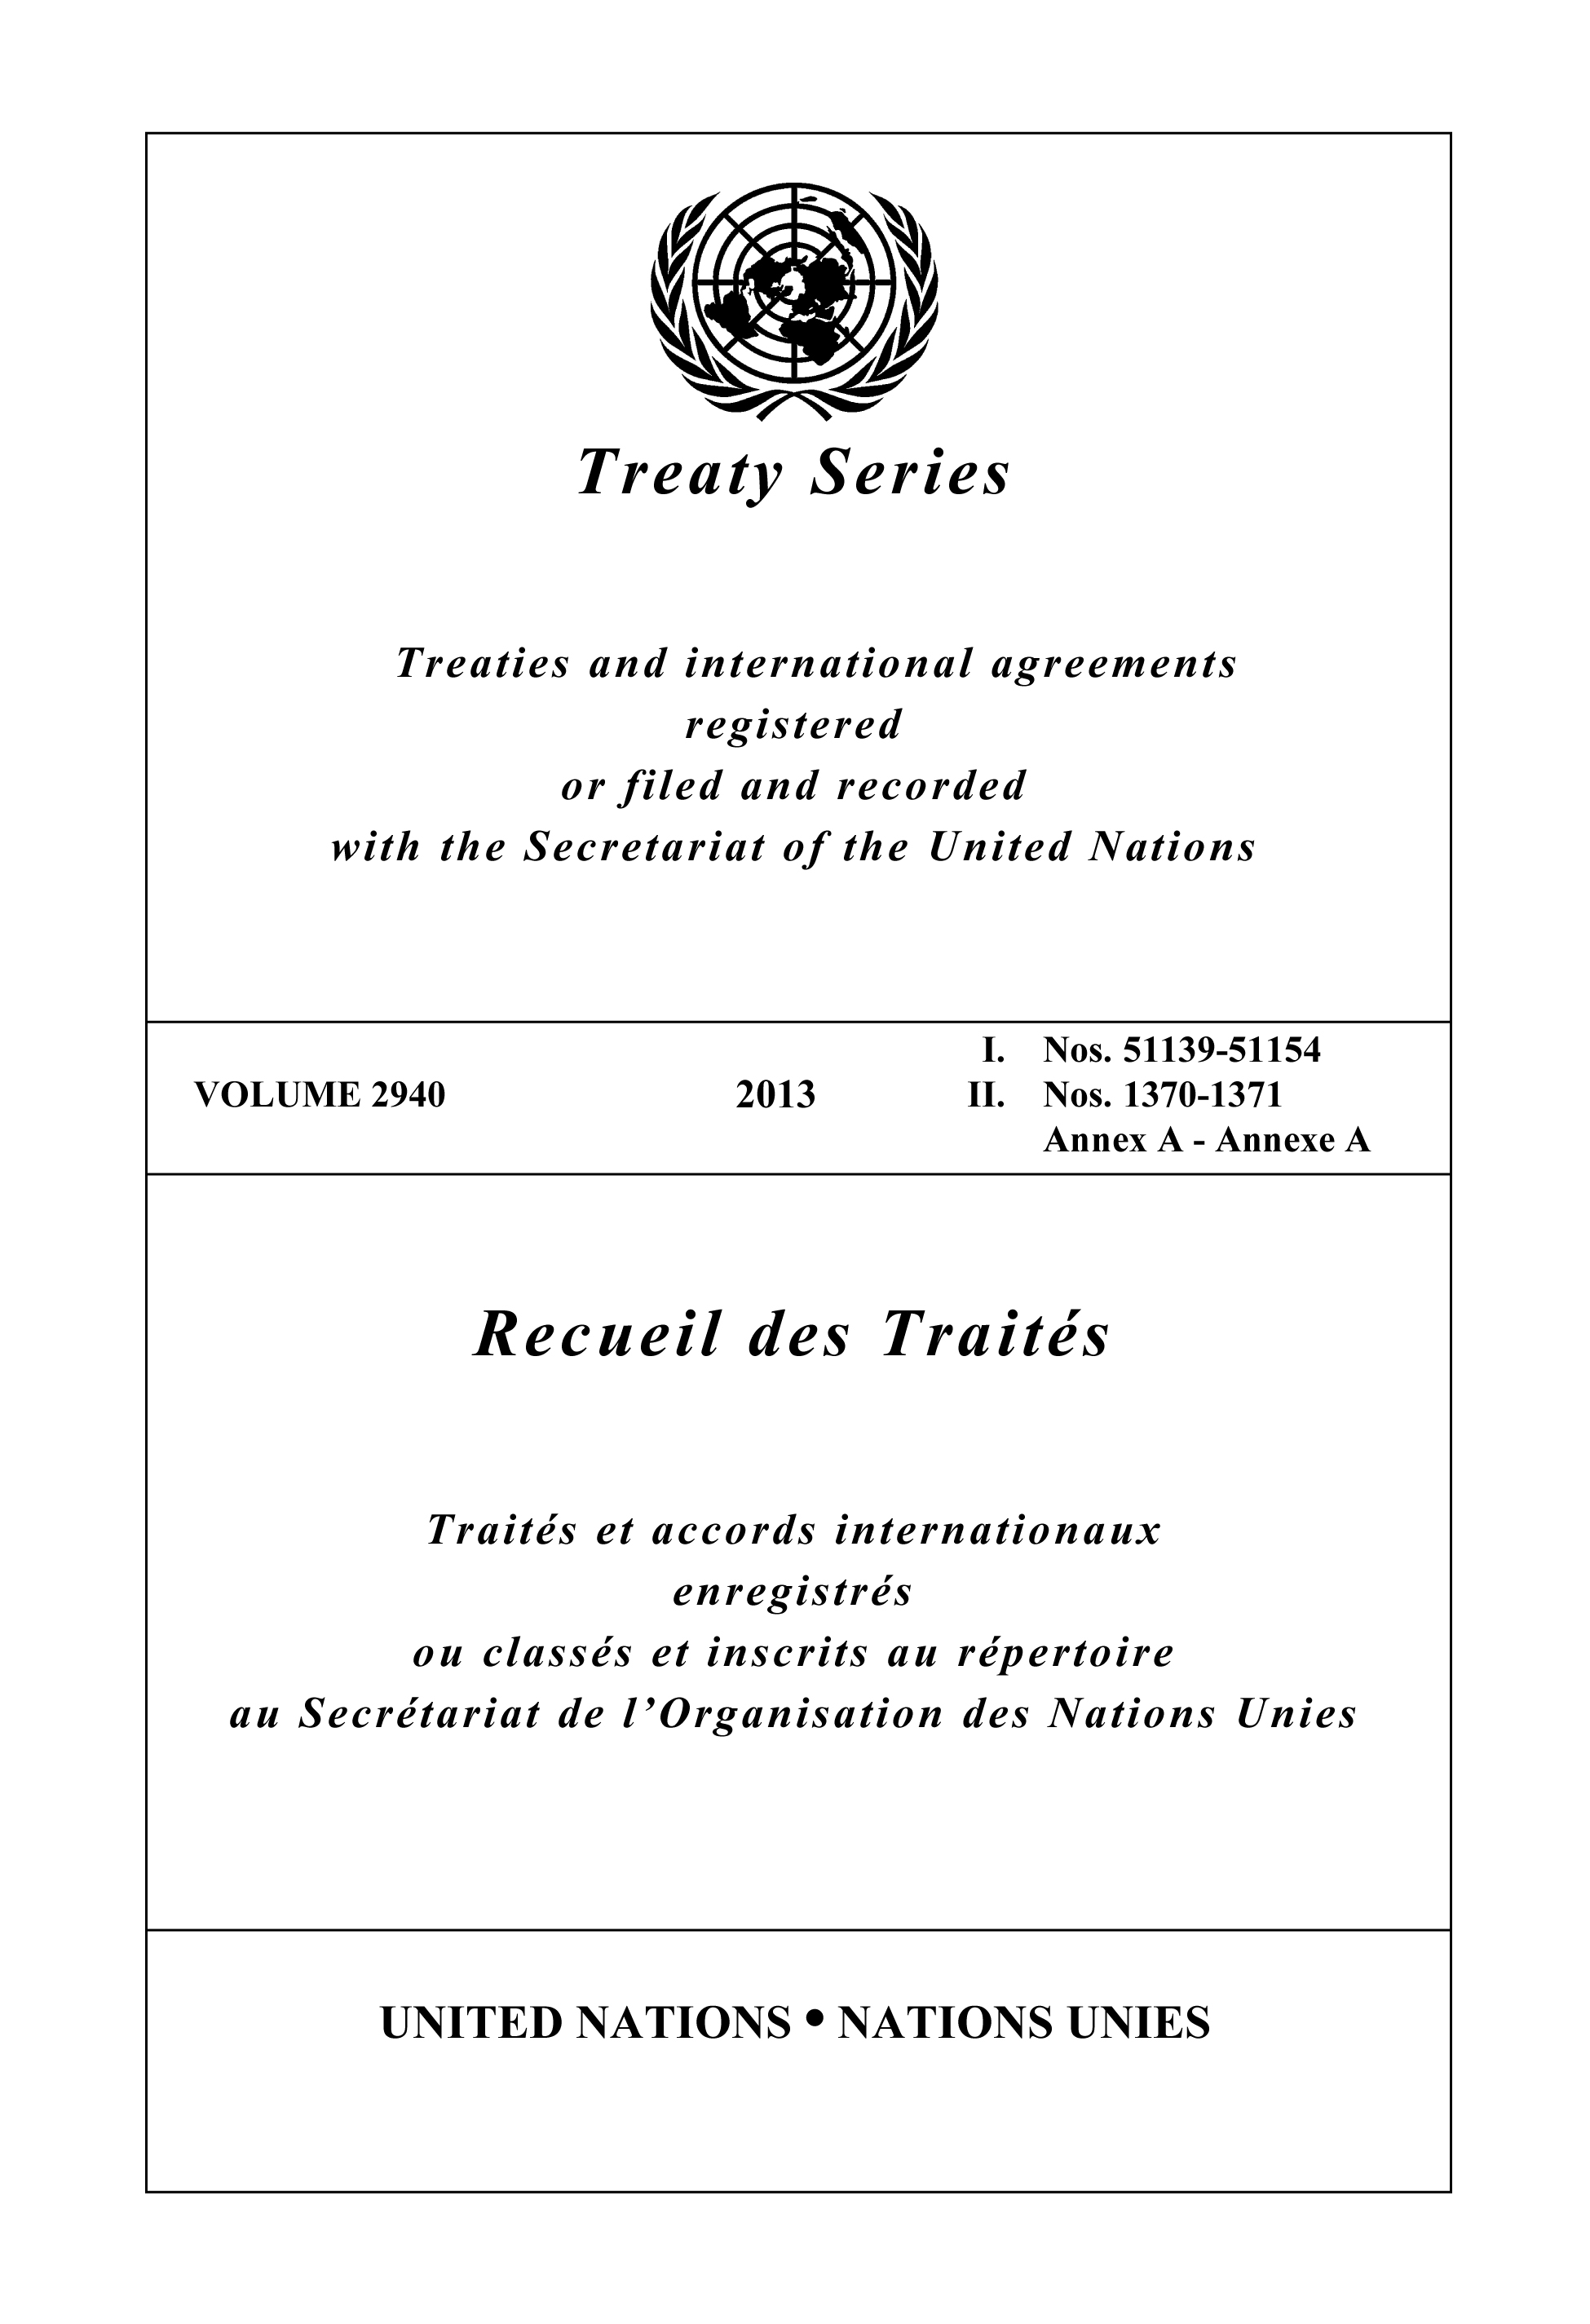 image of Treaty Series 2940